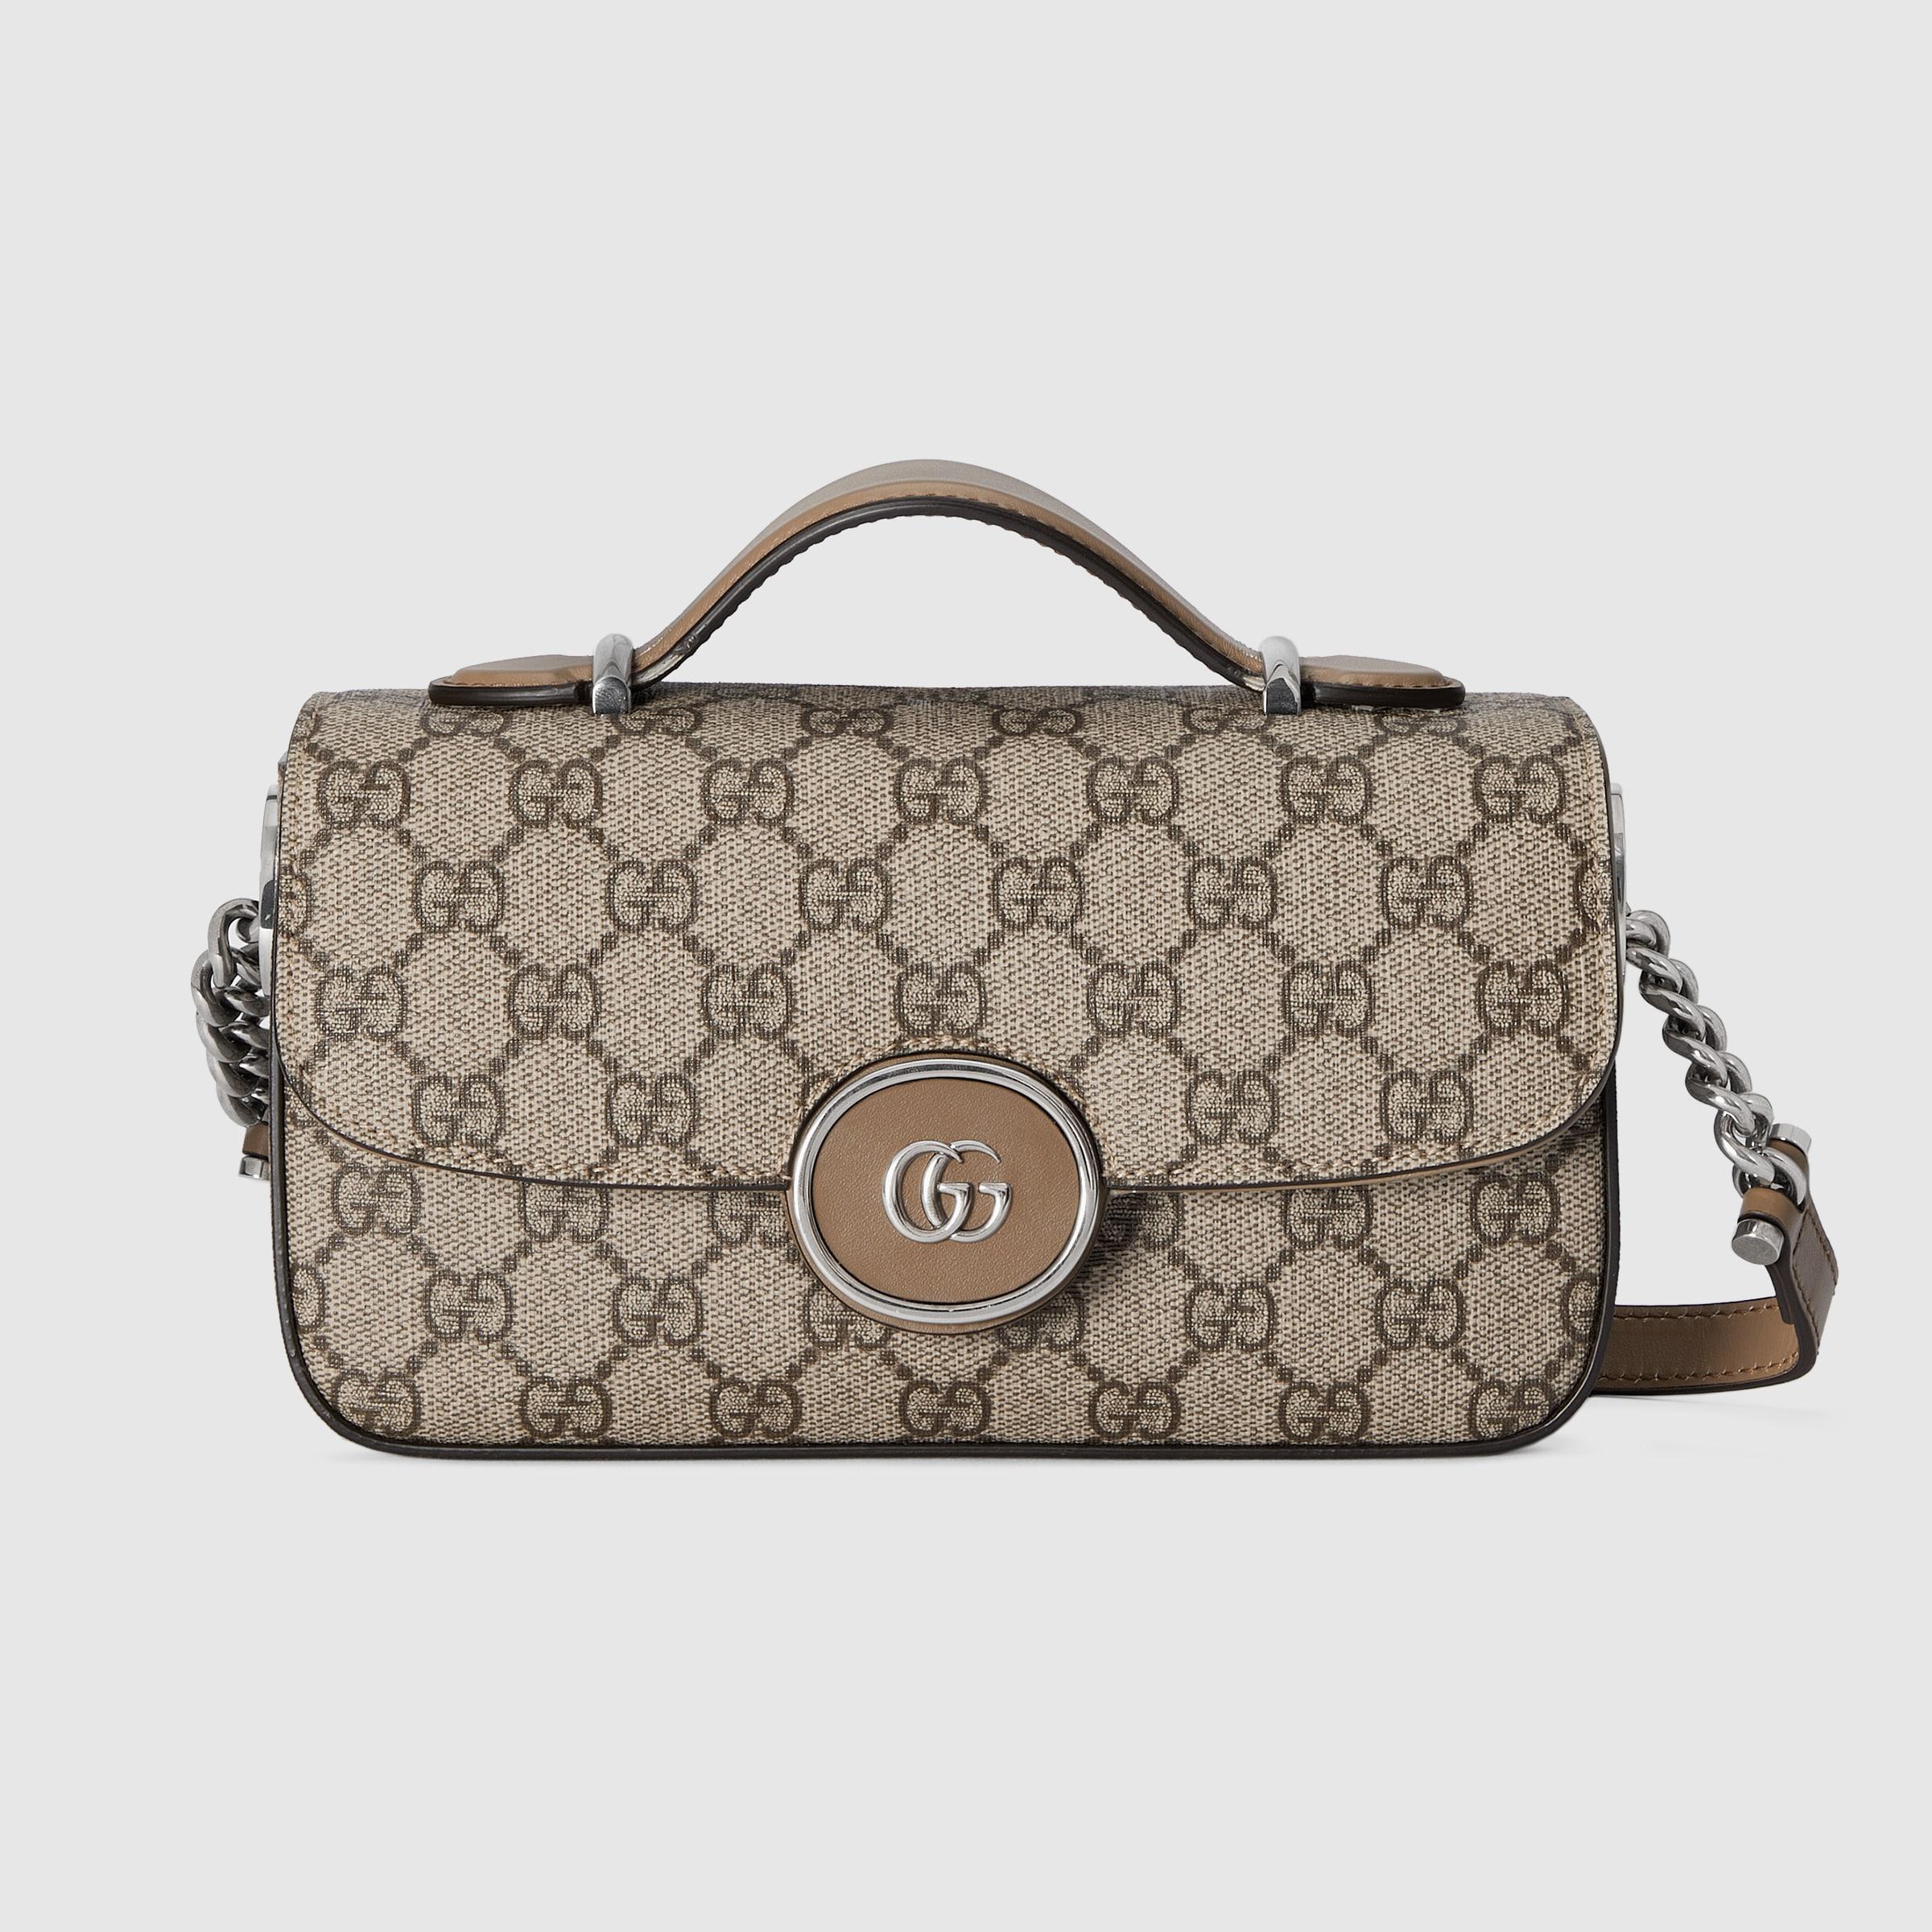 Gucci Petite GG Mini Shoulder Bag in Metallic